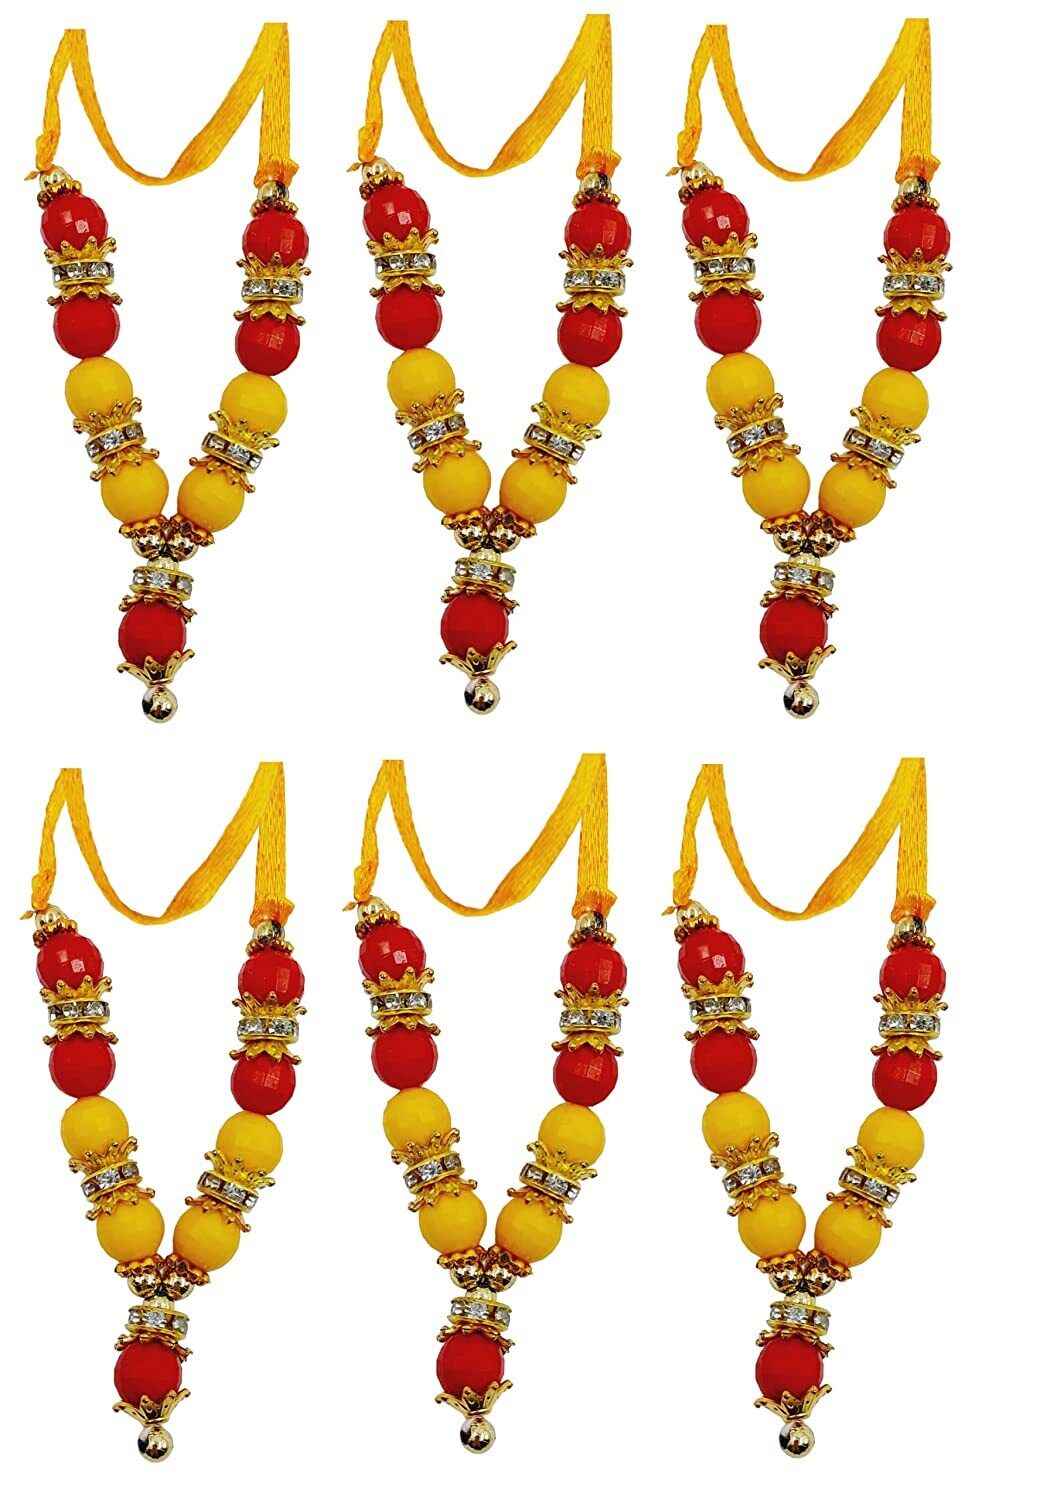 Puja Garland Moti Mala God Idol Small Haar Statue Figurines Red & Yellow 6cm